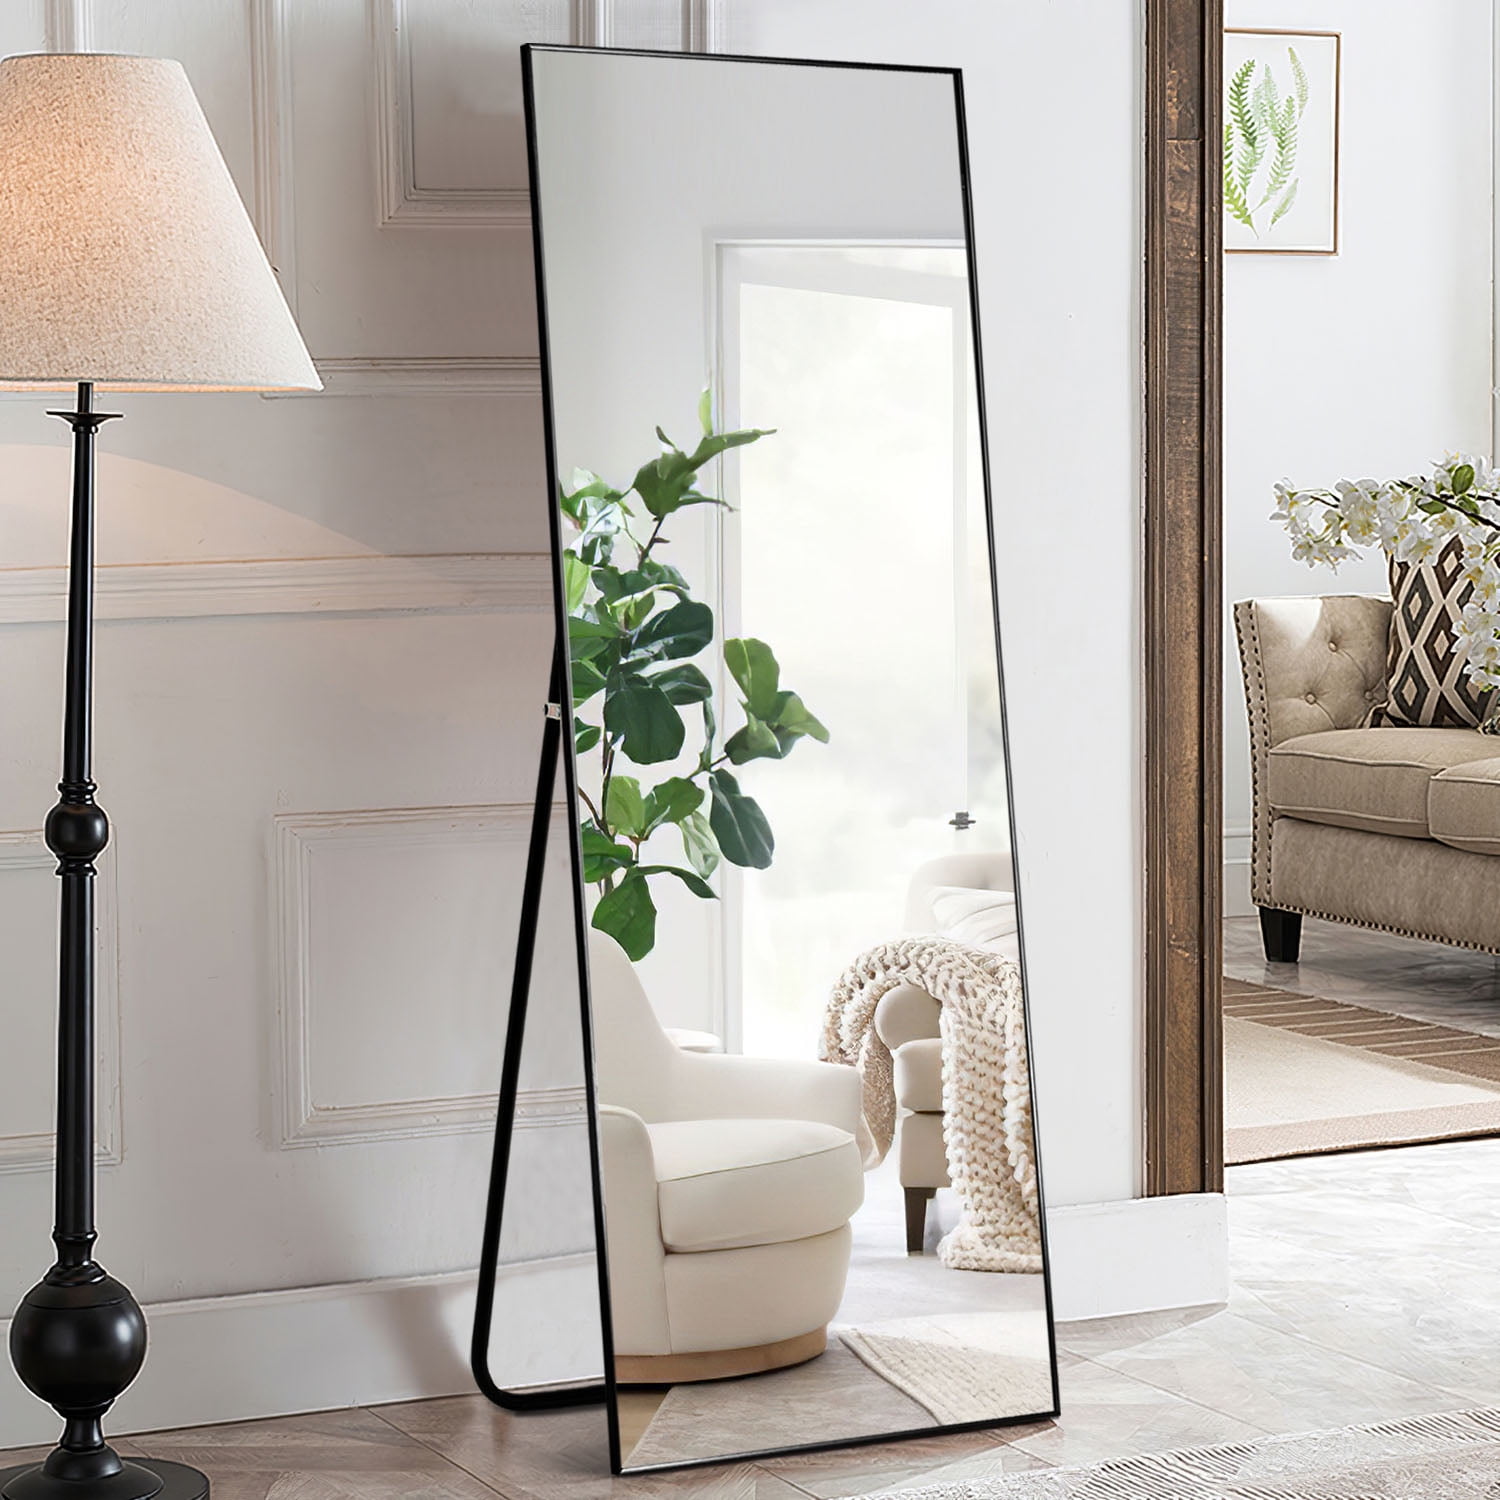 Buy Neutype 65x22 Black Rectangular Full Length Floor Mirror with Stand